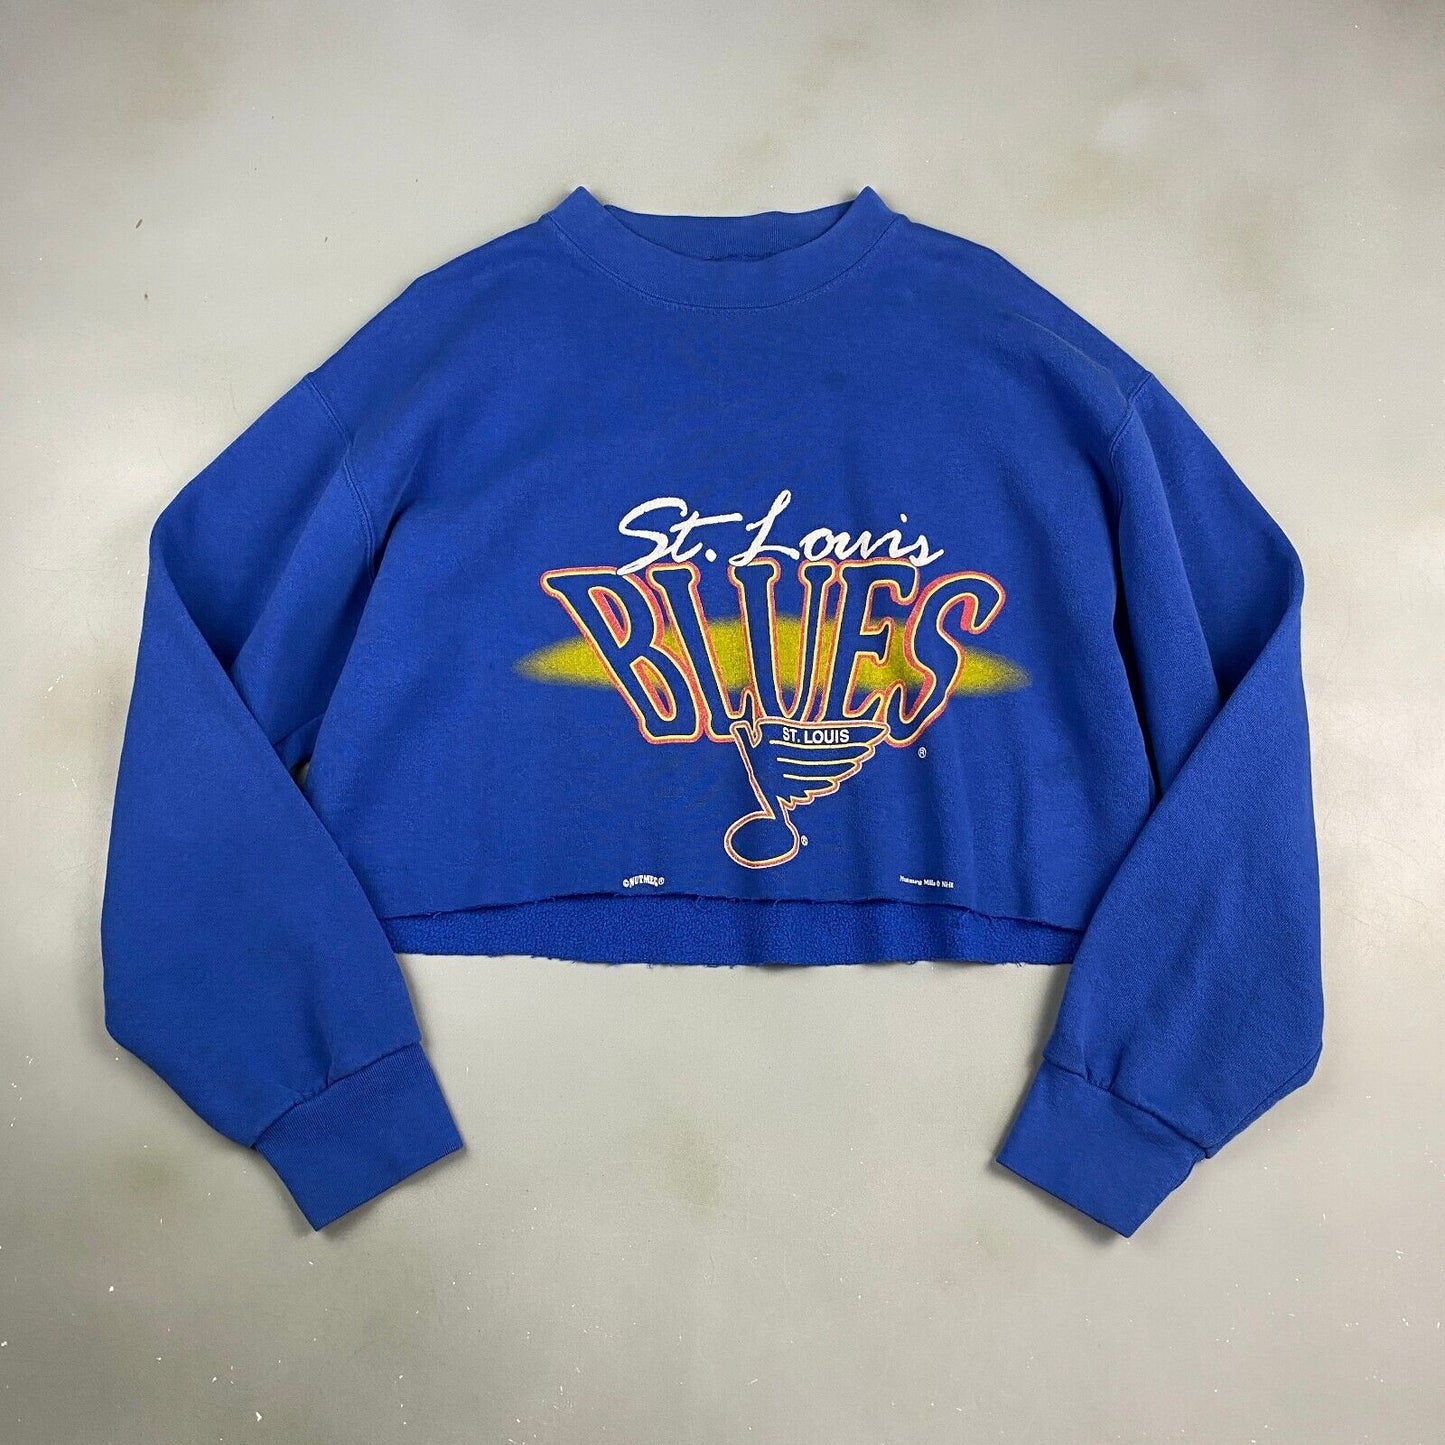 VINTAGE 90s NHL St. Louis Blues Cropped Hockey Sweater sz Medium Adult